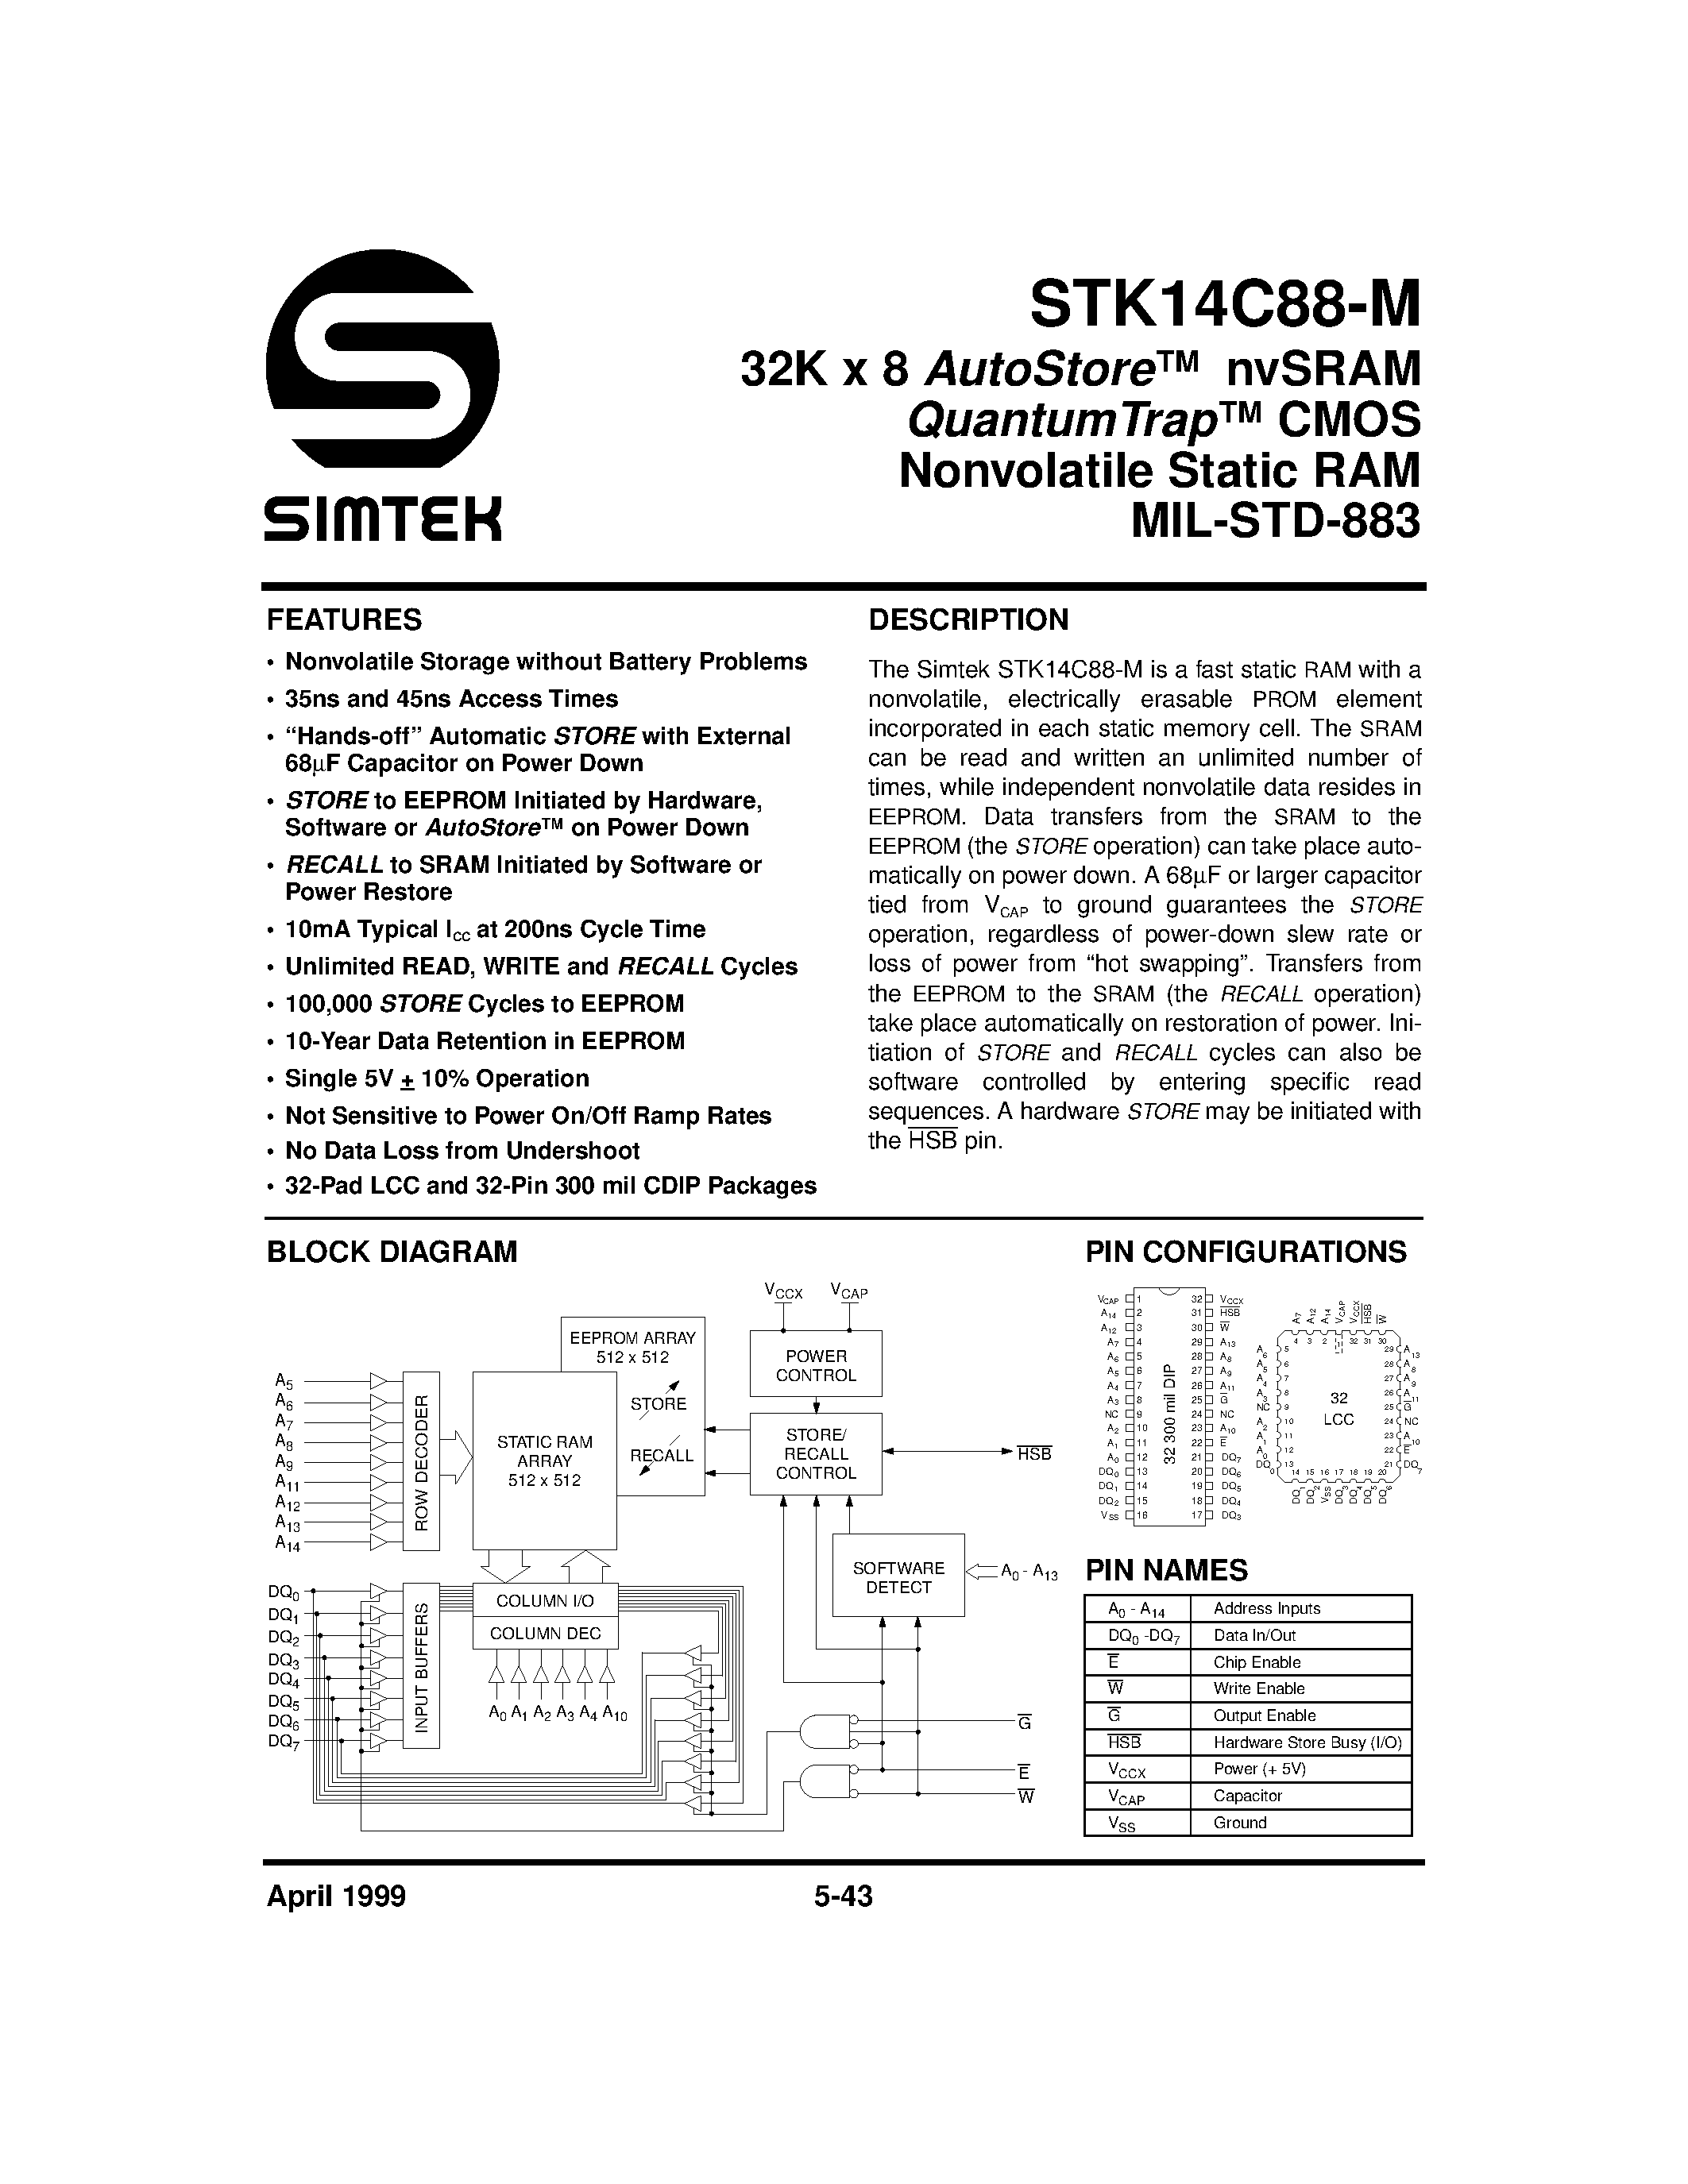 Datasheet STK14C88-M - 32K x 8 AUTOSTORE nvSRAM QUANTUM TRAP CMOS NONVOLATILE STATIC RAM page 1